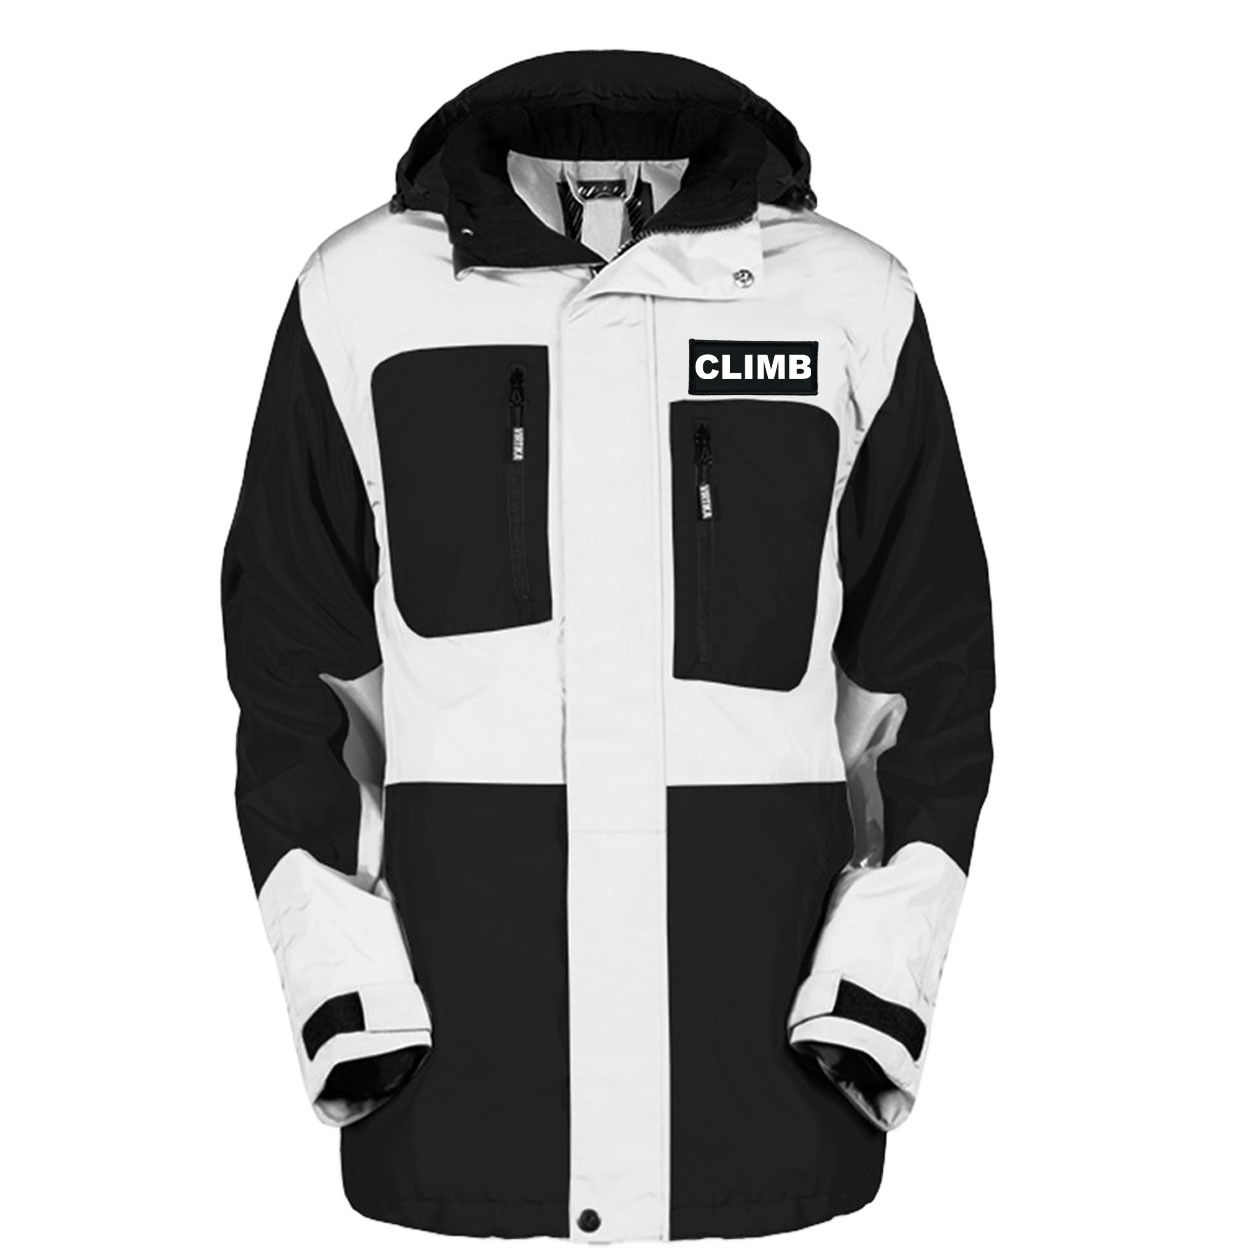 Climb Brand Logo Classic Woven Patch Pro Snowboard Jacket (Black/White)